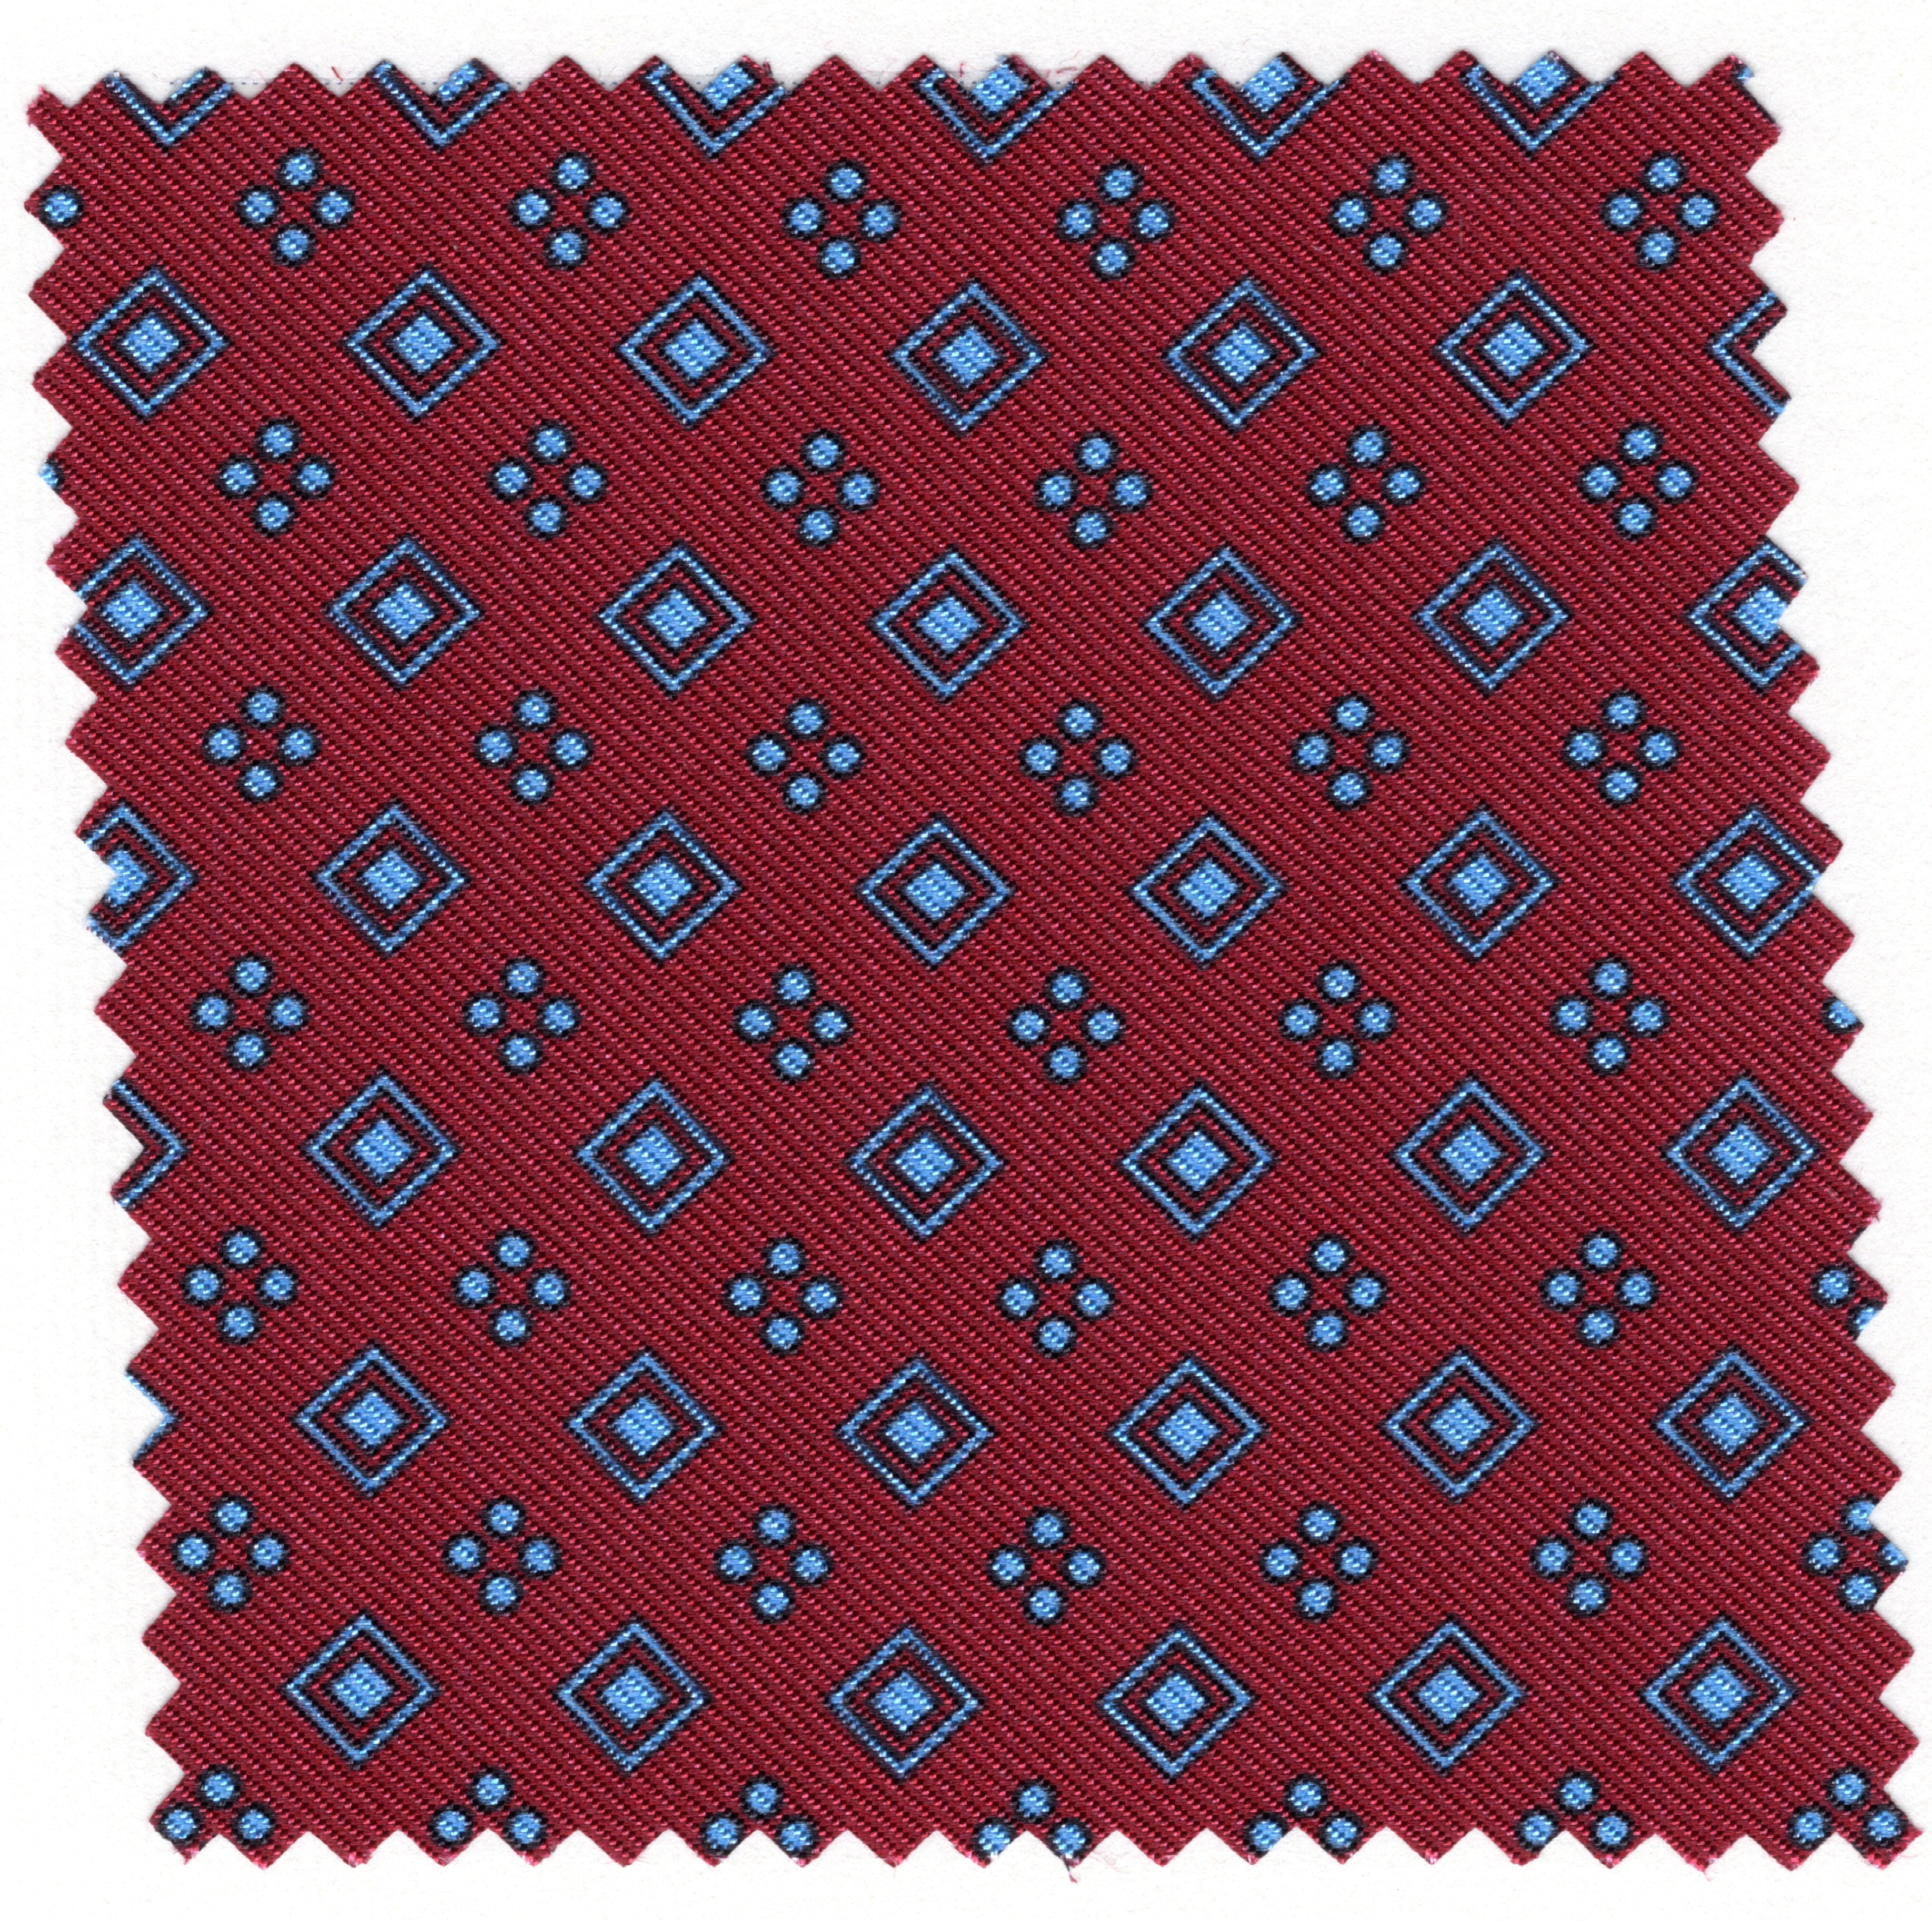 Tie seven bespoke folds - microfantasy 9353-6